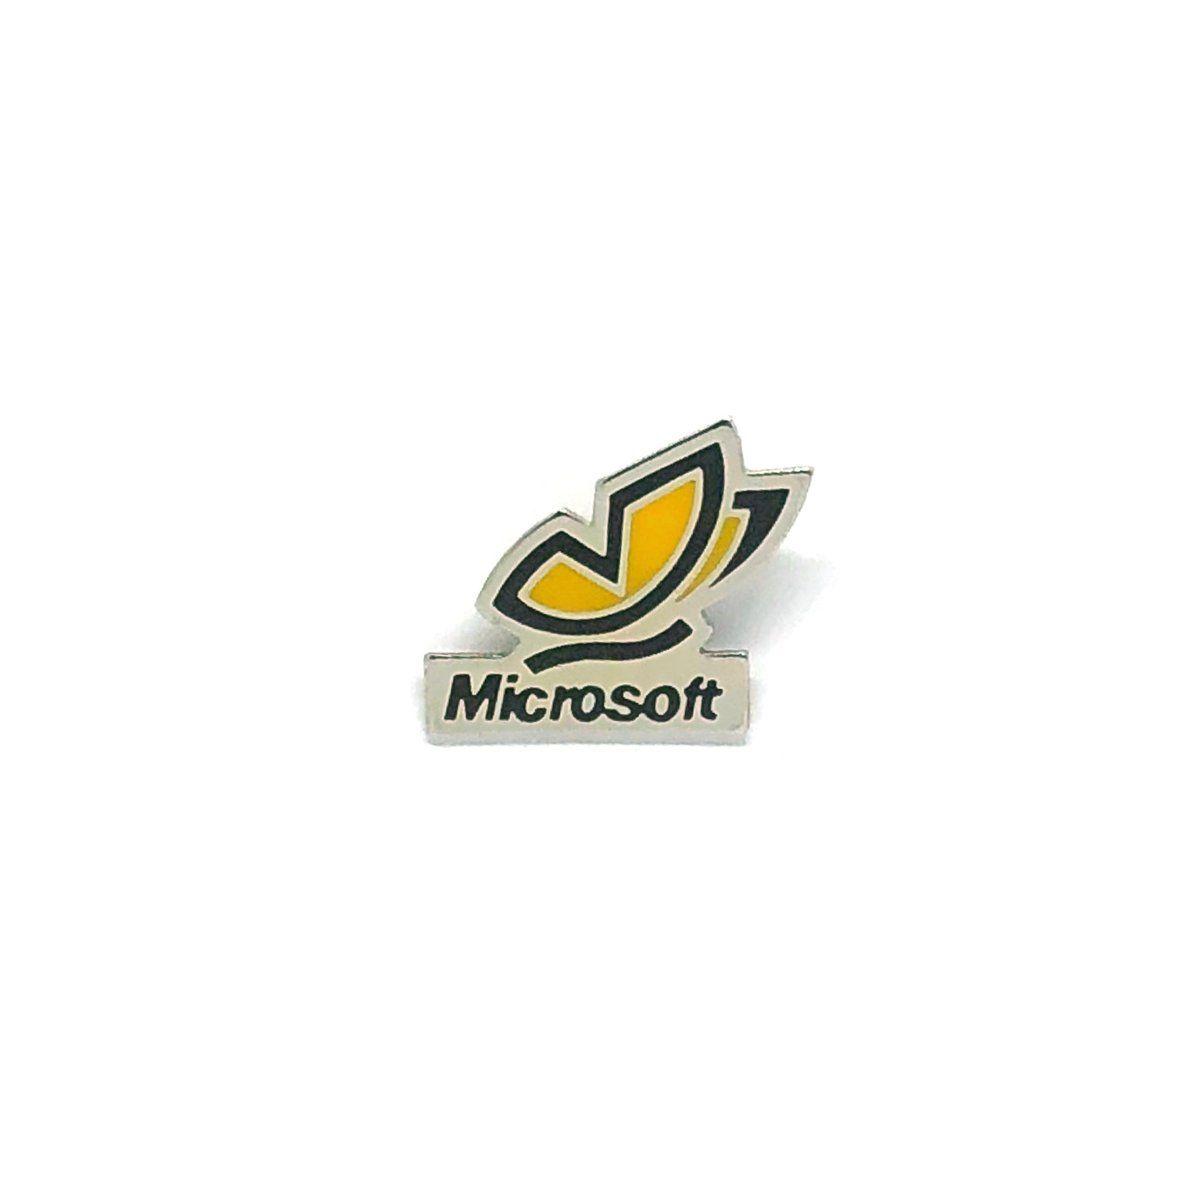 Microsoft Butterfly Logo - Vintage | Internet Pin Company